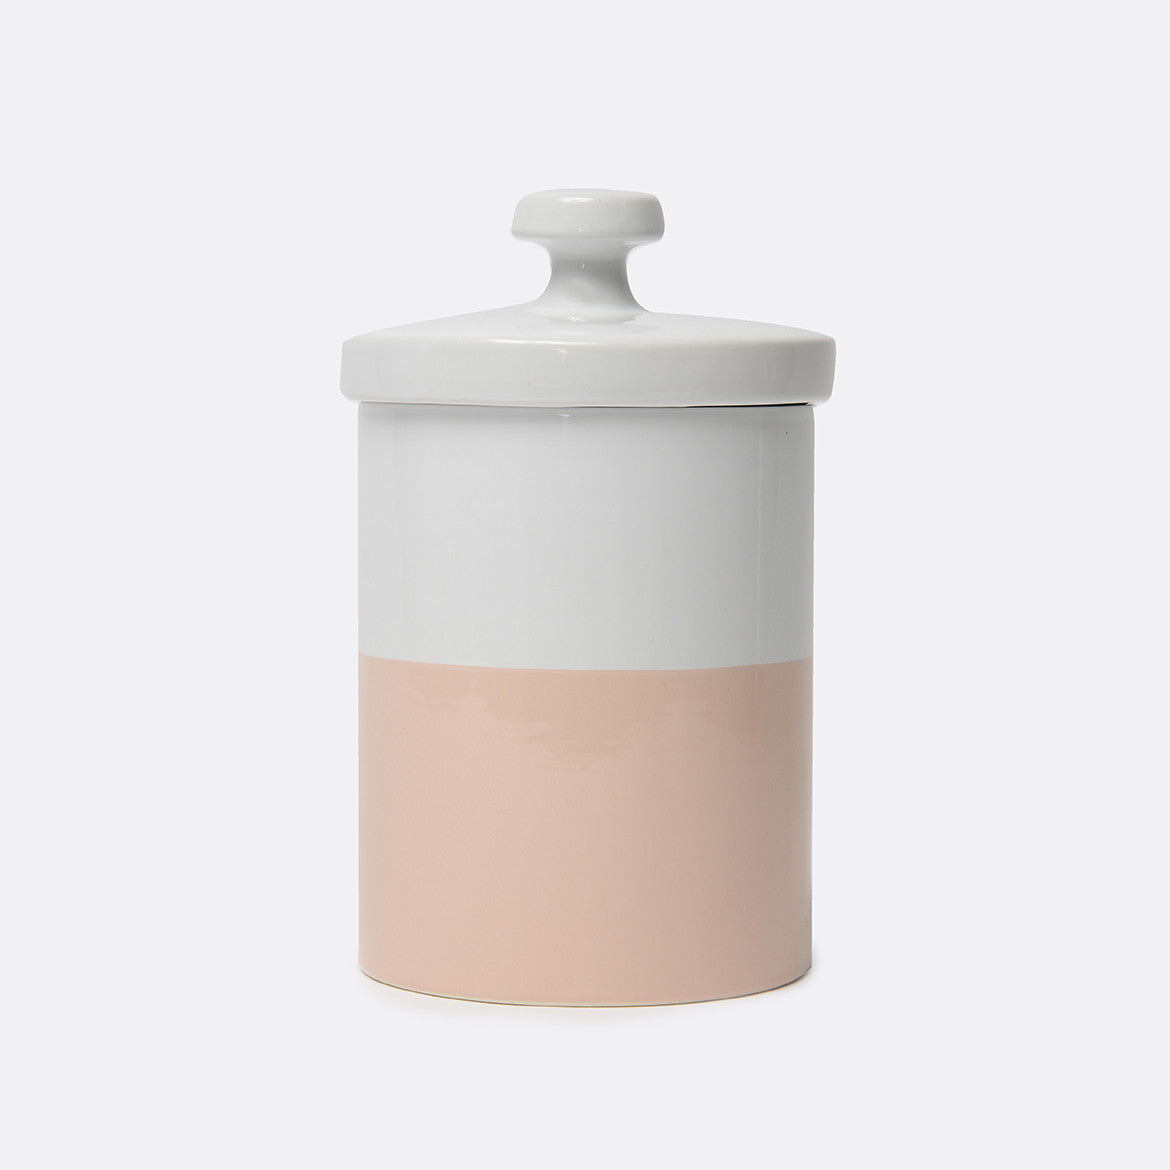 Dipped Color Ceramic Dog Treat Jar by Waggo